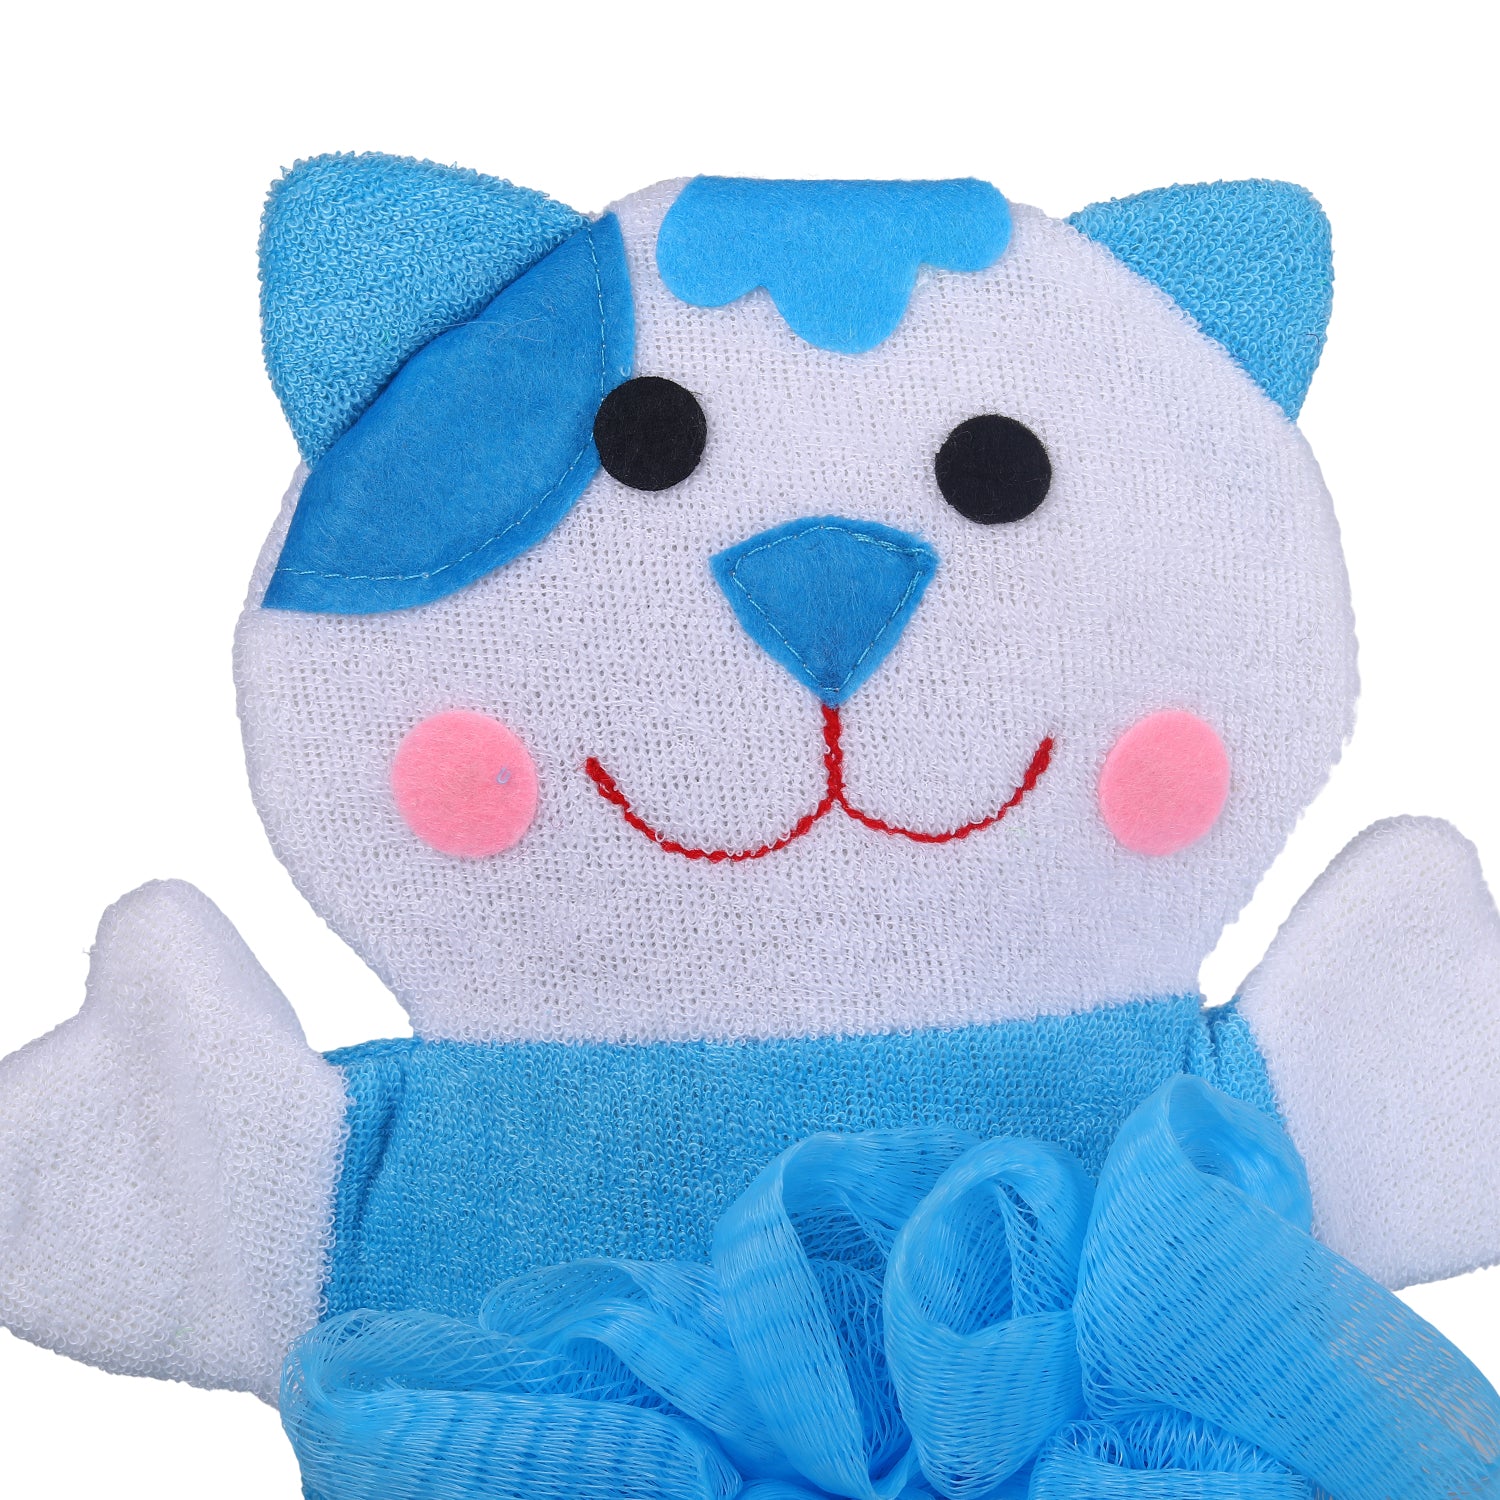 Baby Moo Pretty Kitty Bath Time Fun Hand Puppet Loofah Bath Glove - Blue - Baby Moo